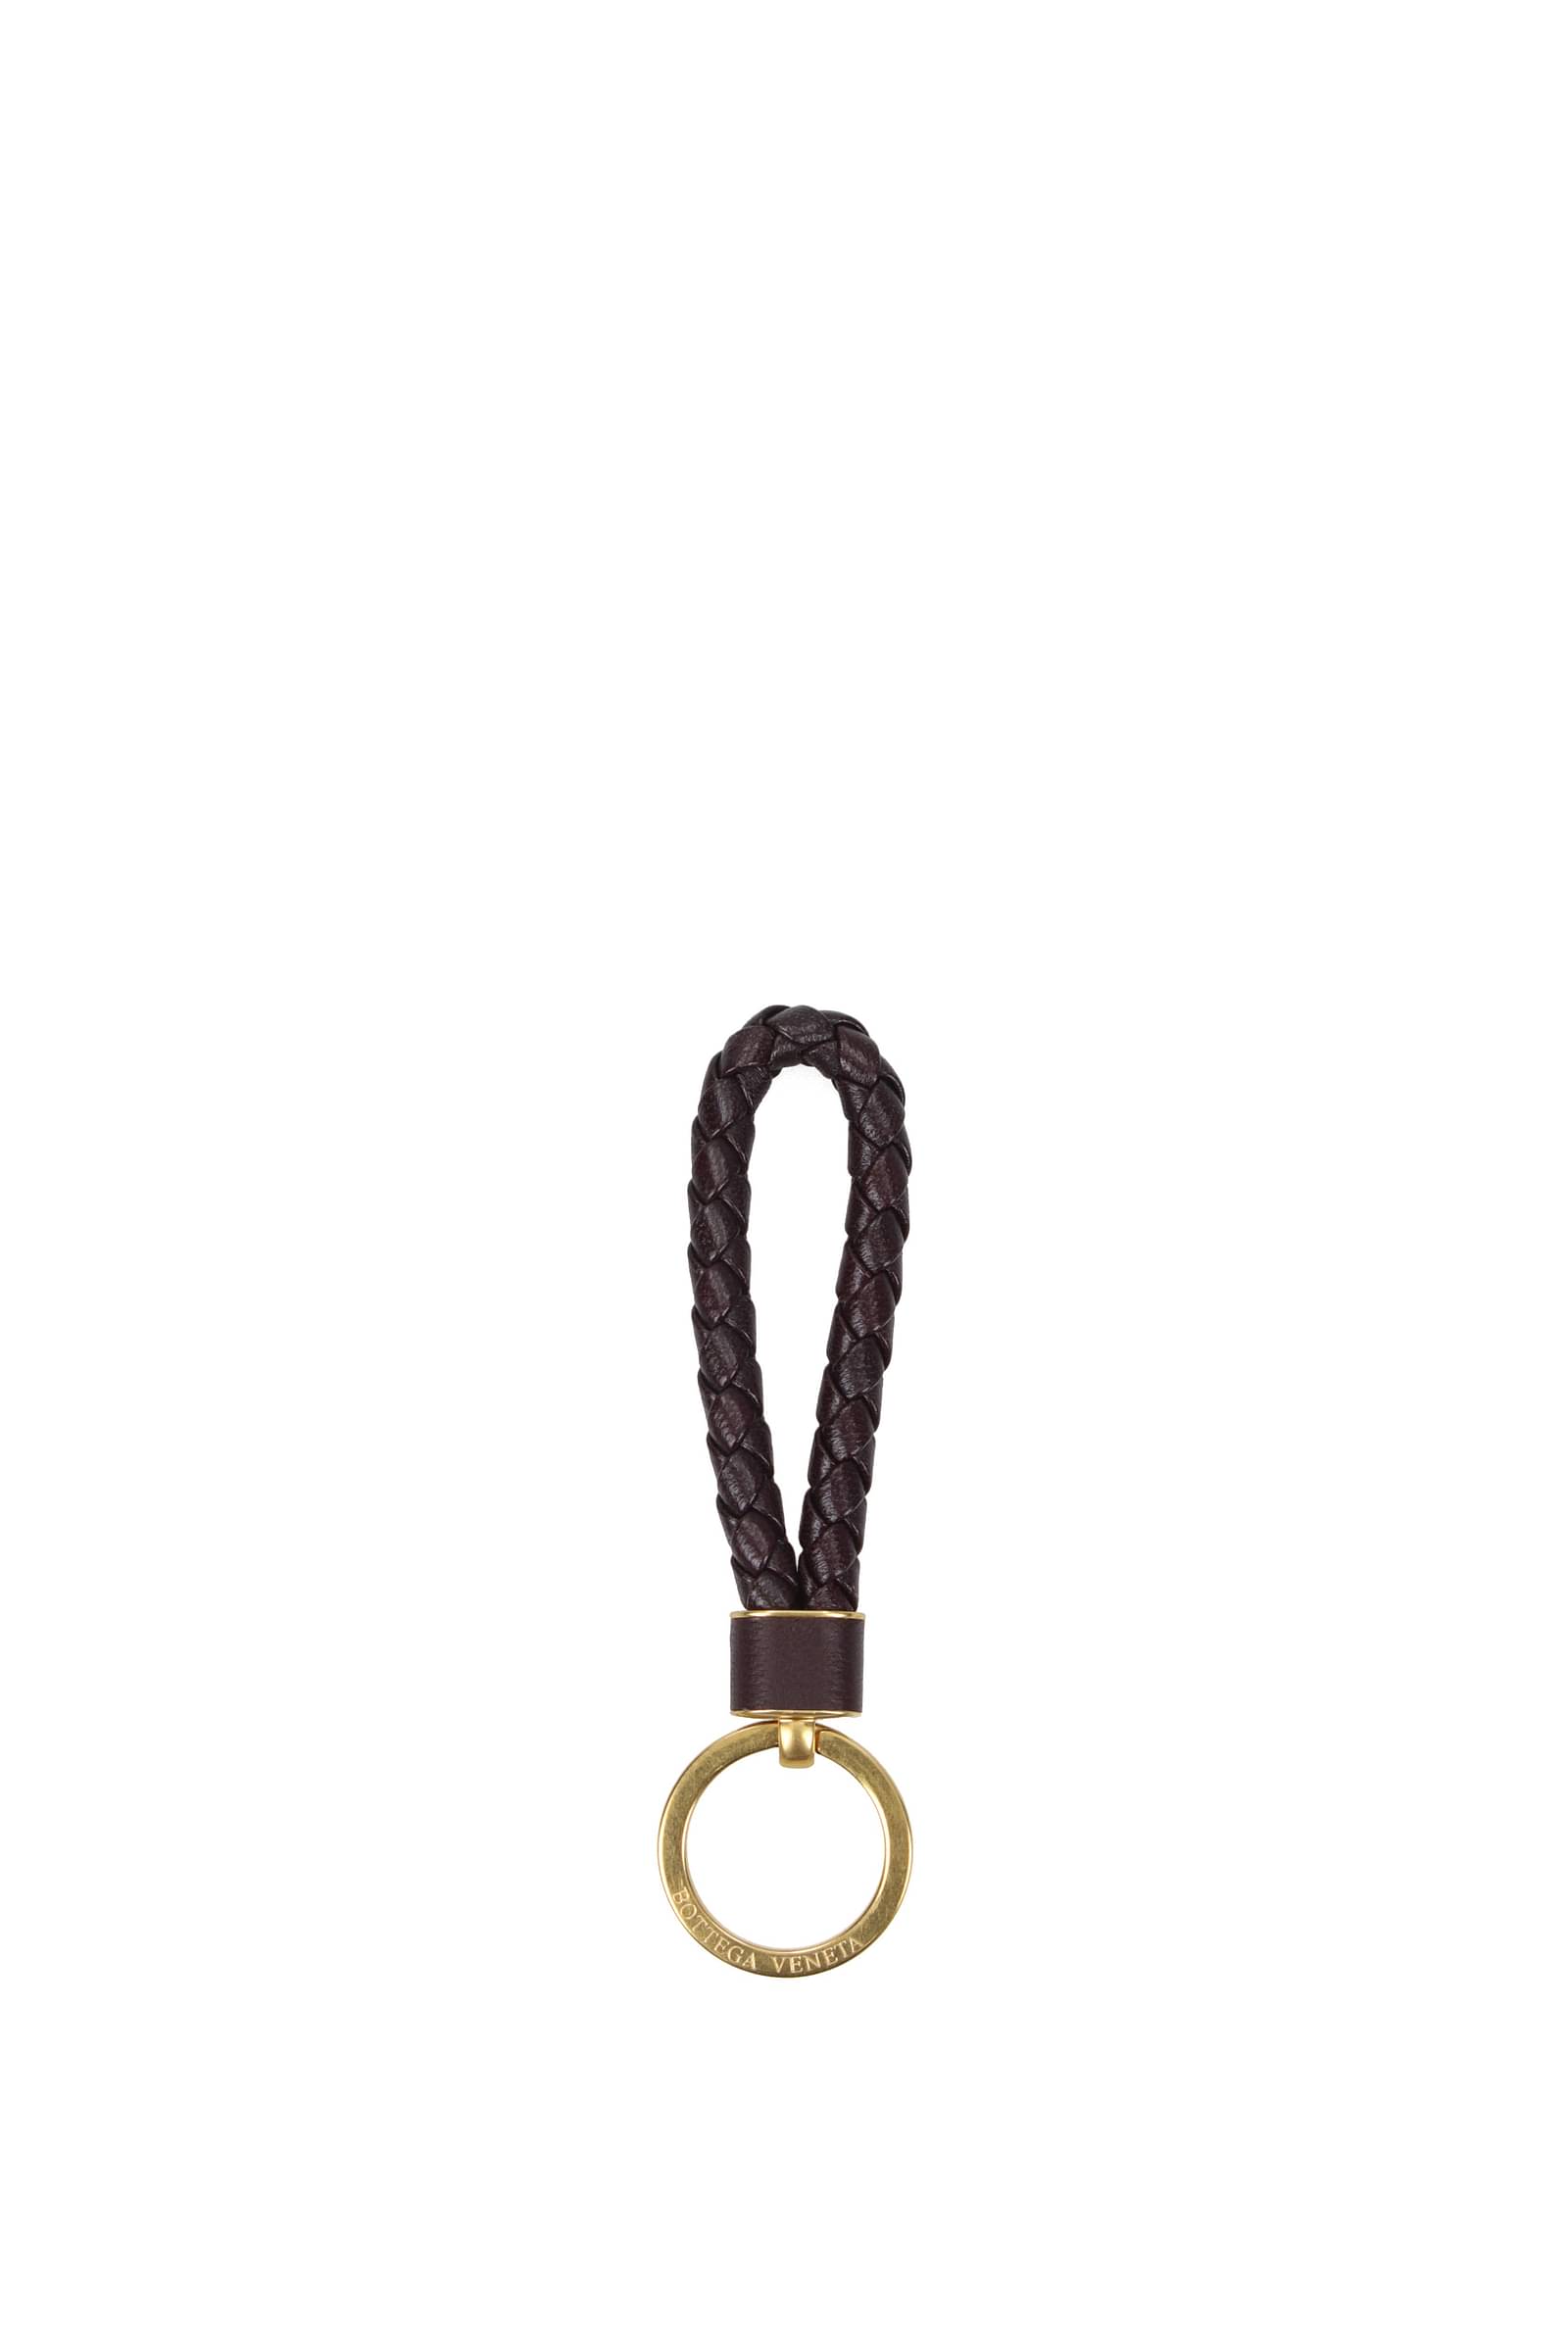 KESOCORAY Women Wristlet Bracelet Keychain Wallet,Silicone Wooden Beaded  Bangle Key Ring Tassel Key Chain with Lipstick Holder for Girls(Pink) -  Yahoo Shopping